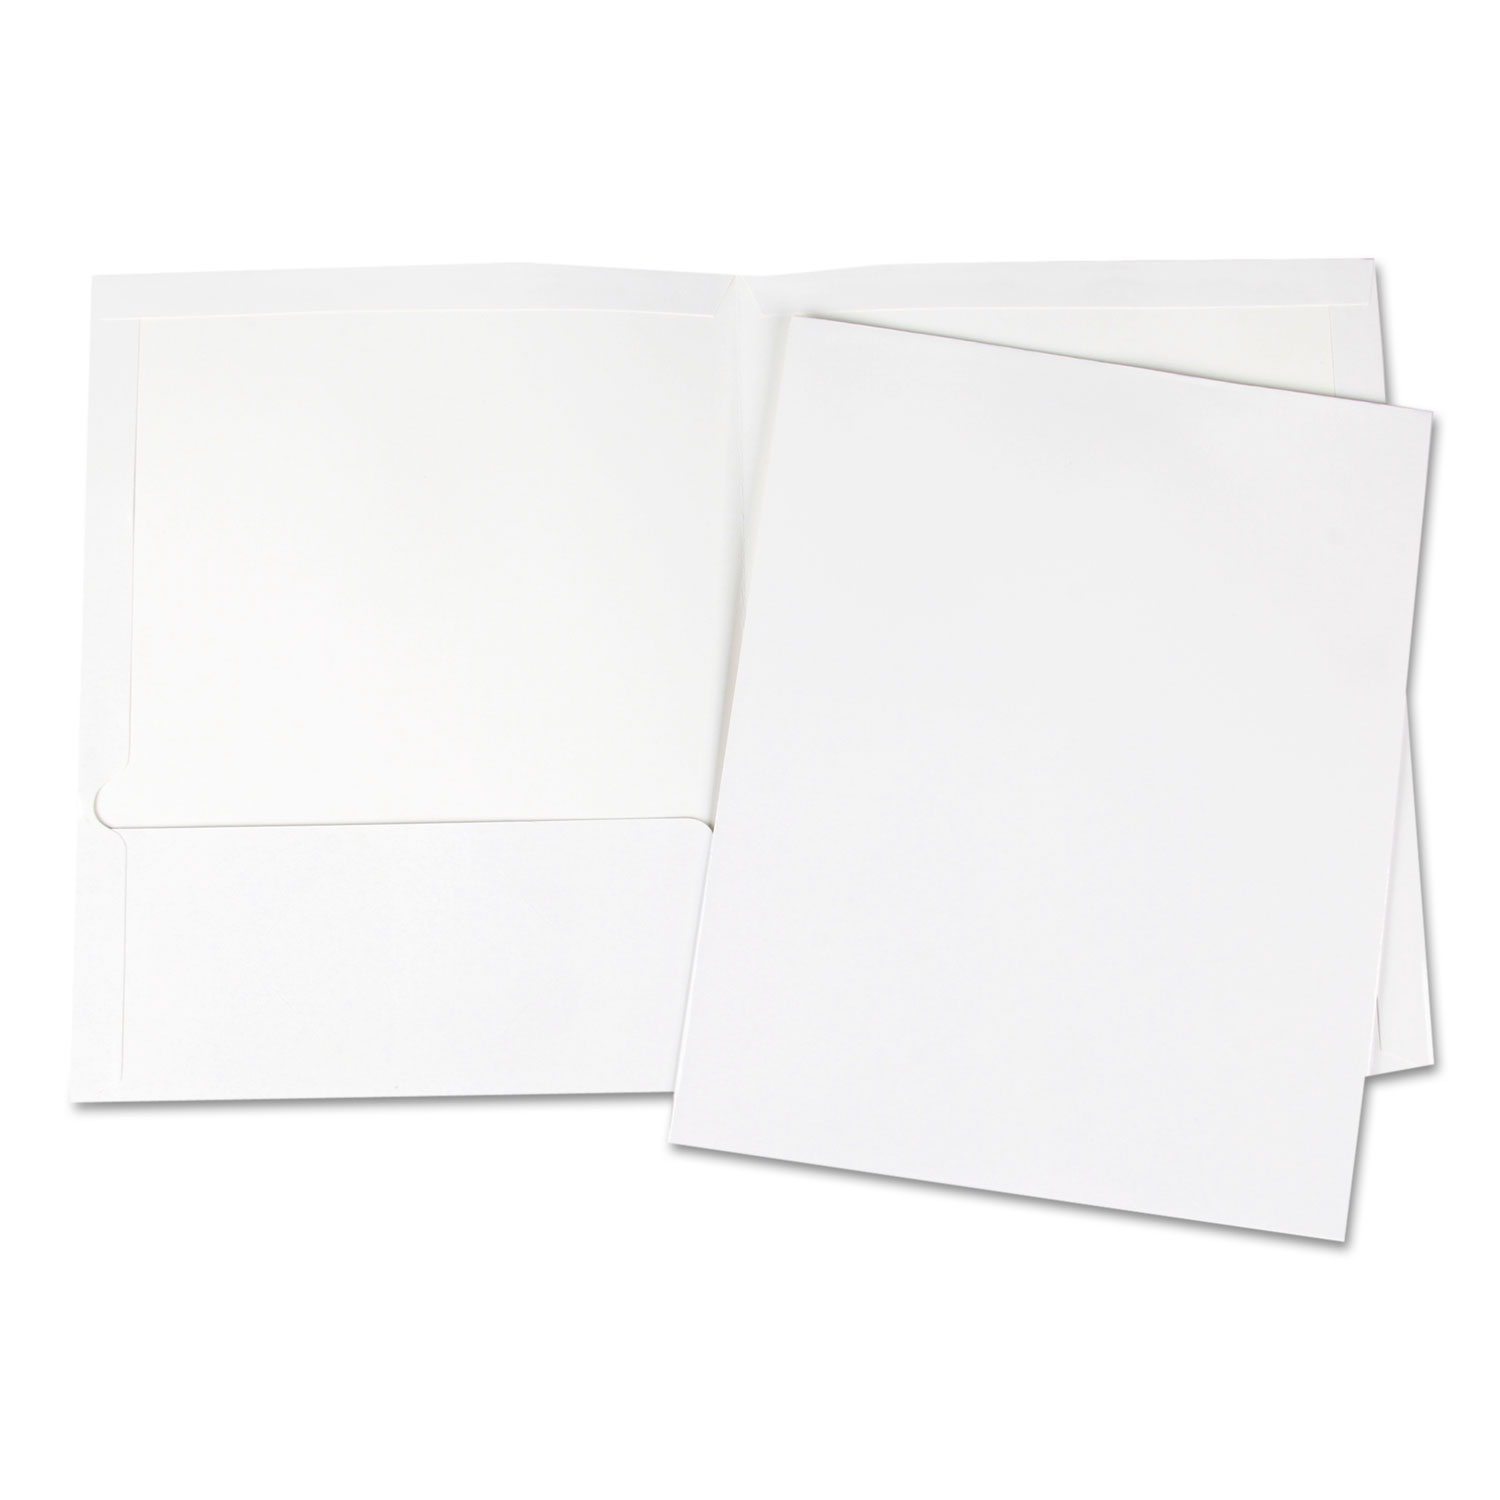  Universal UNV56417 Laminated Two-Pocket Portfolios, Cardboard Paper, White, 11 x 8 1/2, 25/Pack (UNV56417) 